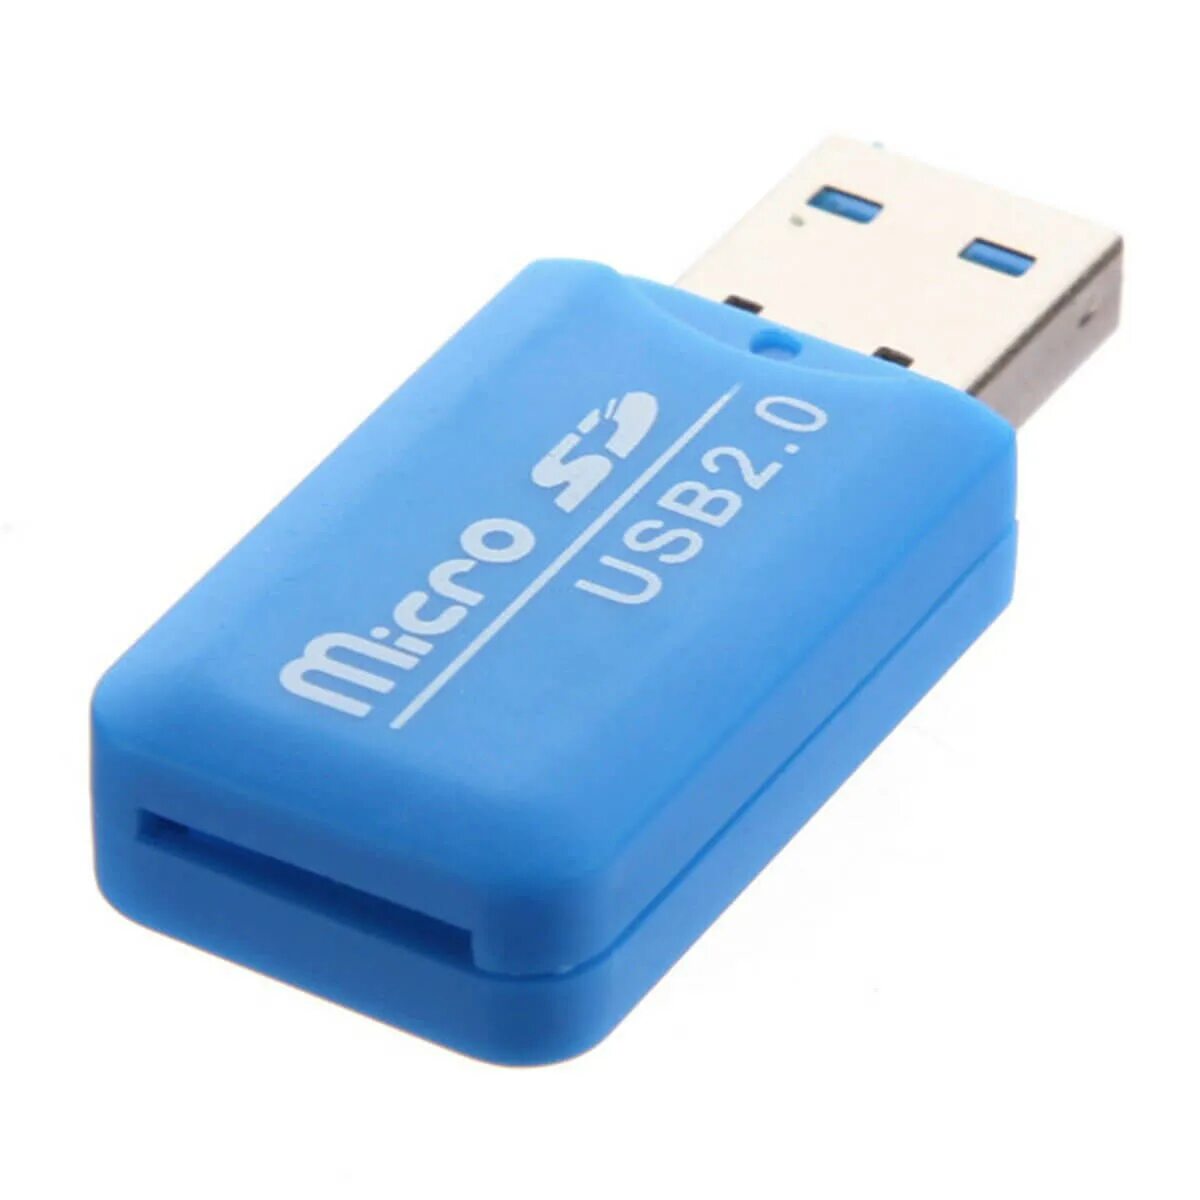 High usb 2.0. Адаптер USB 3.0 микро SD. Card Reader 2 SD 2 MICROSD. Адаптер микро SD карта TF кард-ридер USB. Картридер для микро SD USB 2.0.